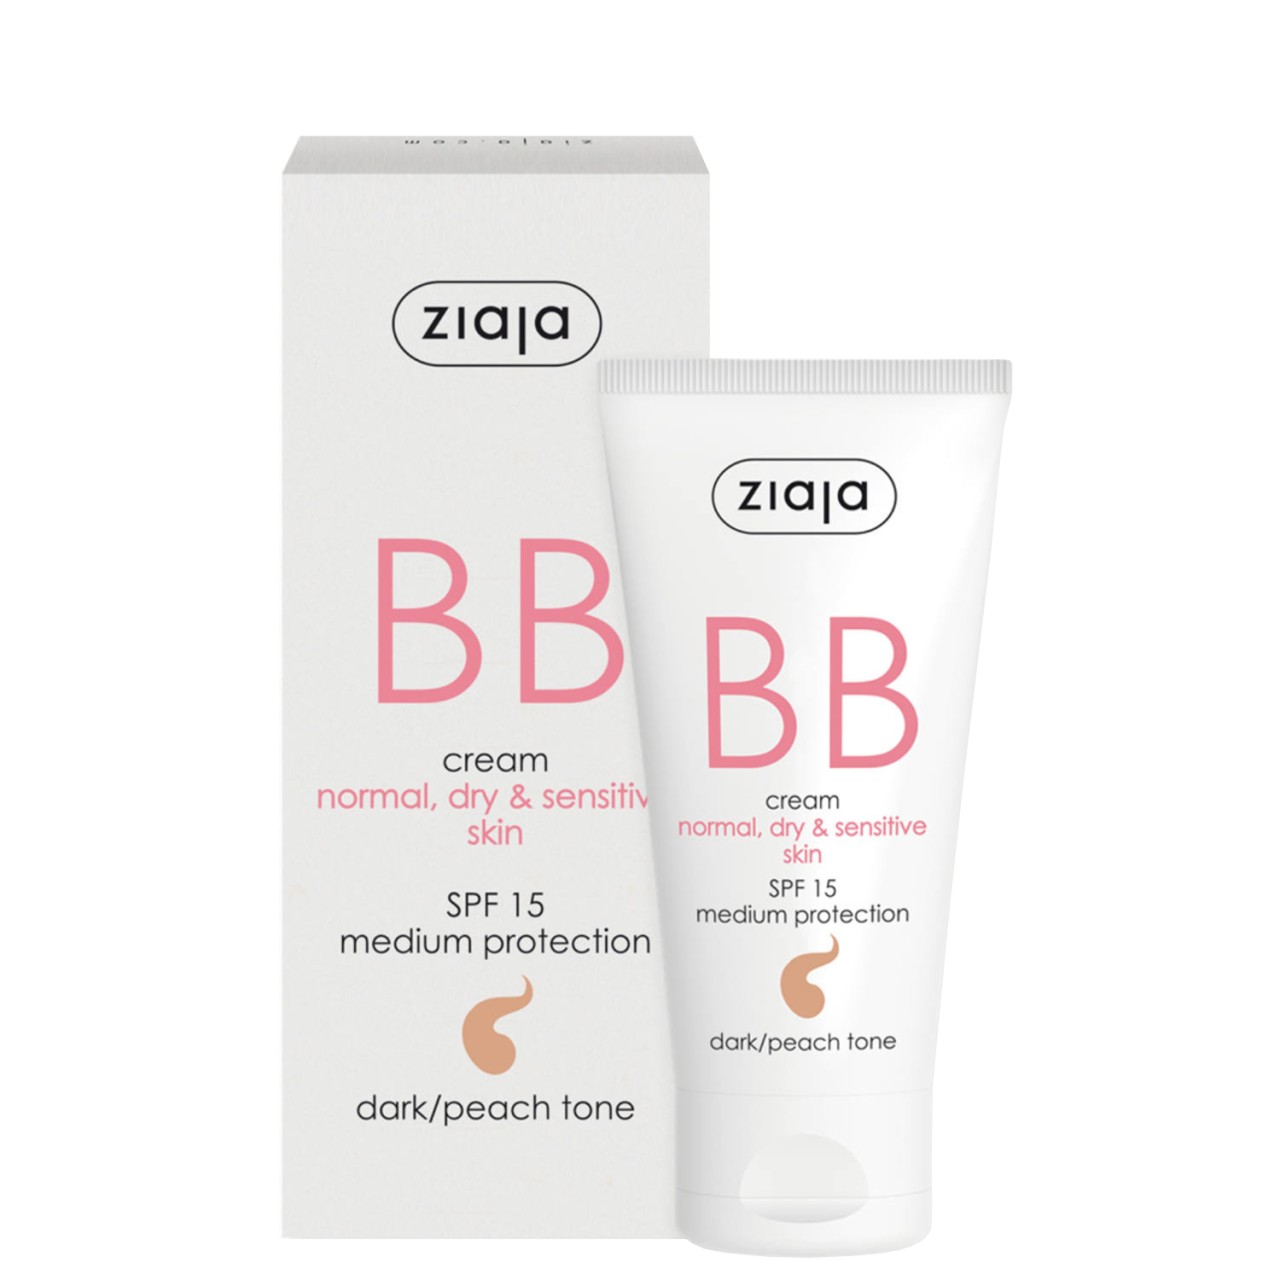 Ziaja BB Cream SPF15 For Normal/Dry/Sensitive Skin - Dark/Peach Tone